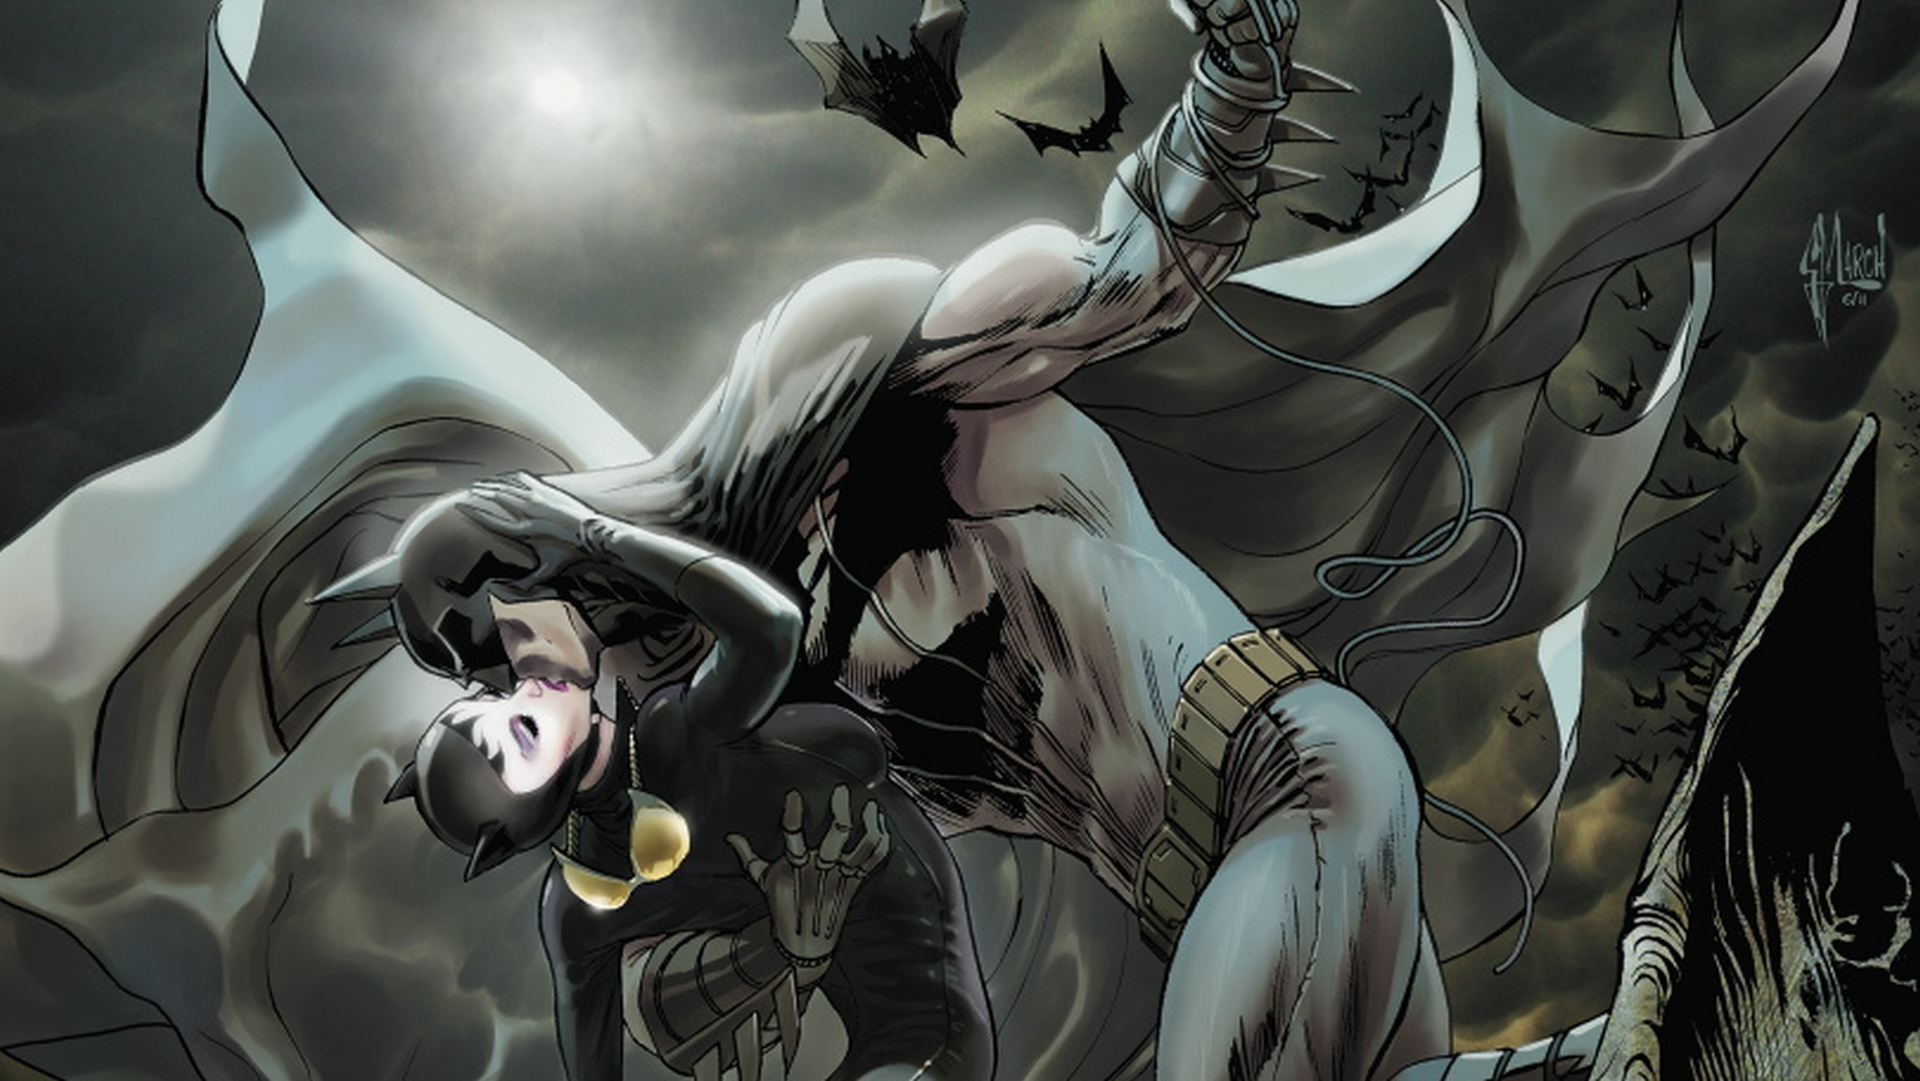 A fierce female villain, Catwoman, stands alongside the legendary superhero, Batman, in this vibrant comic-inspired desktop wallpaper.